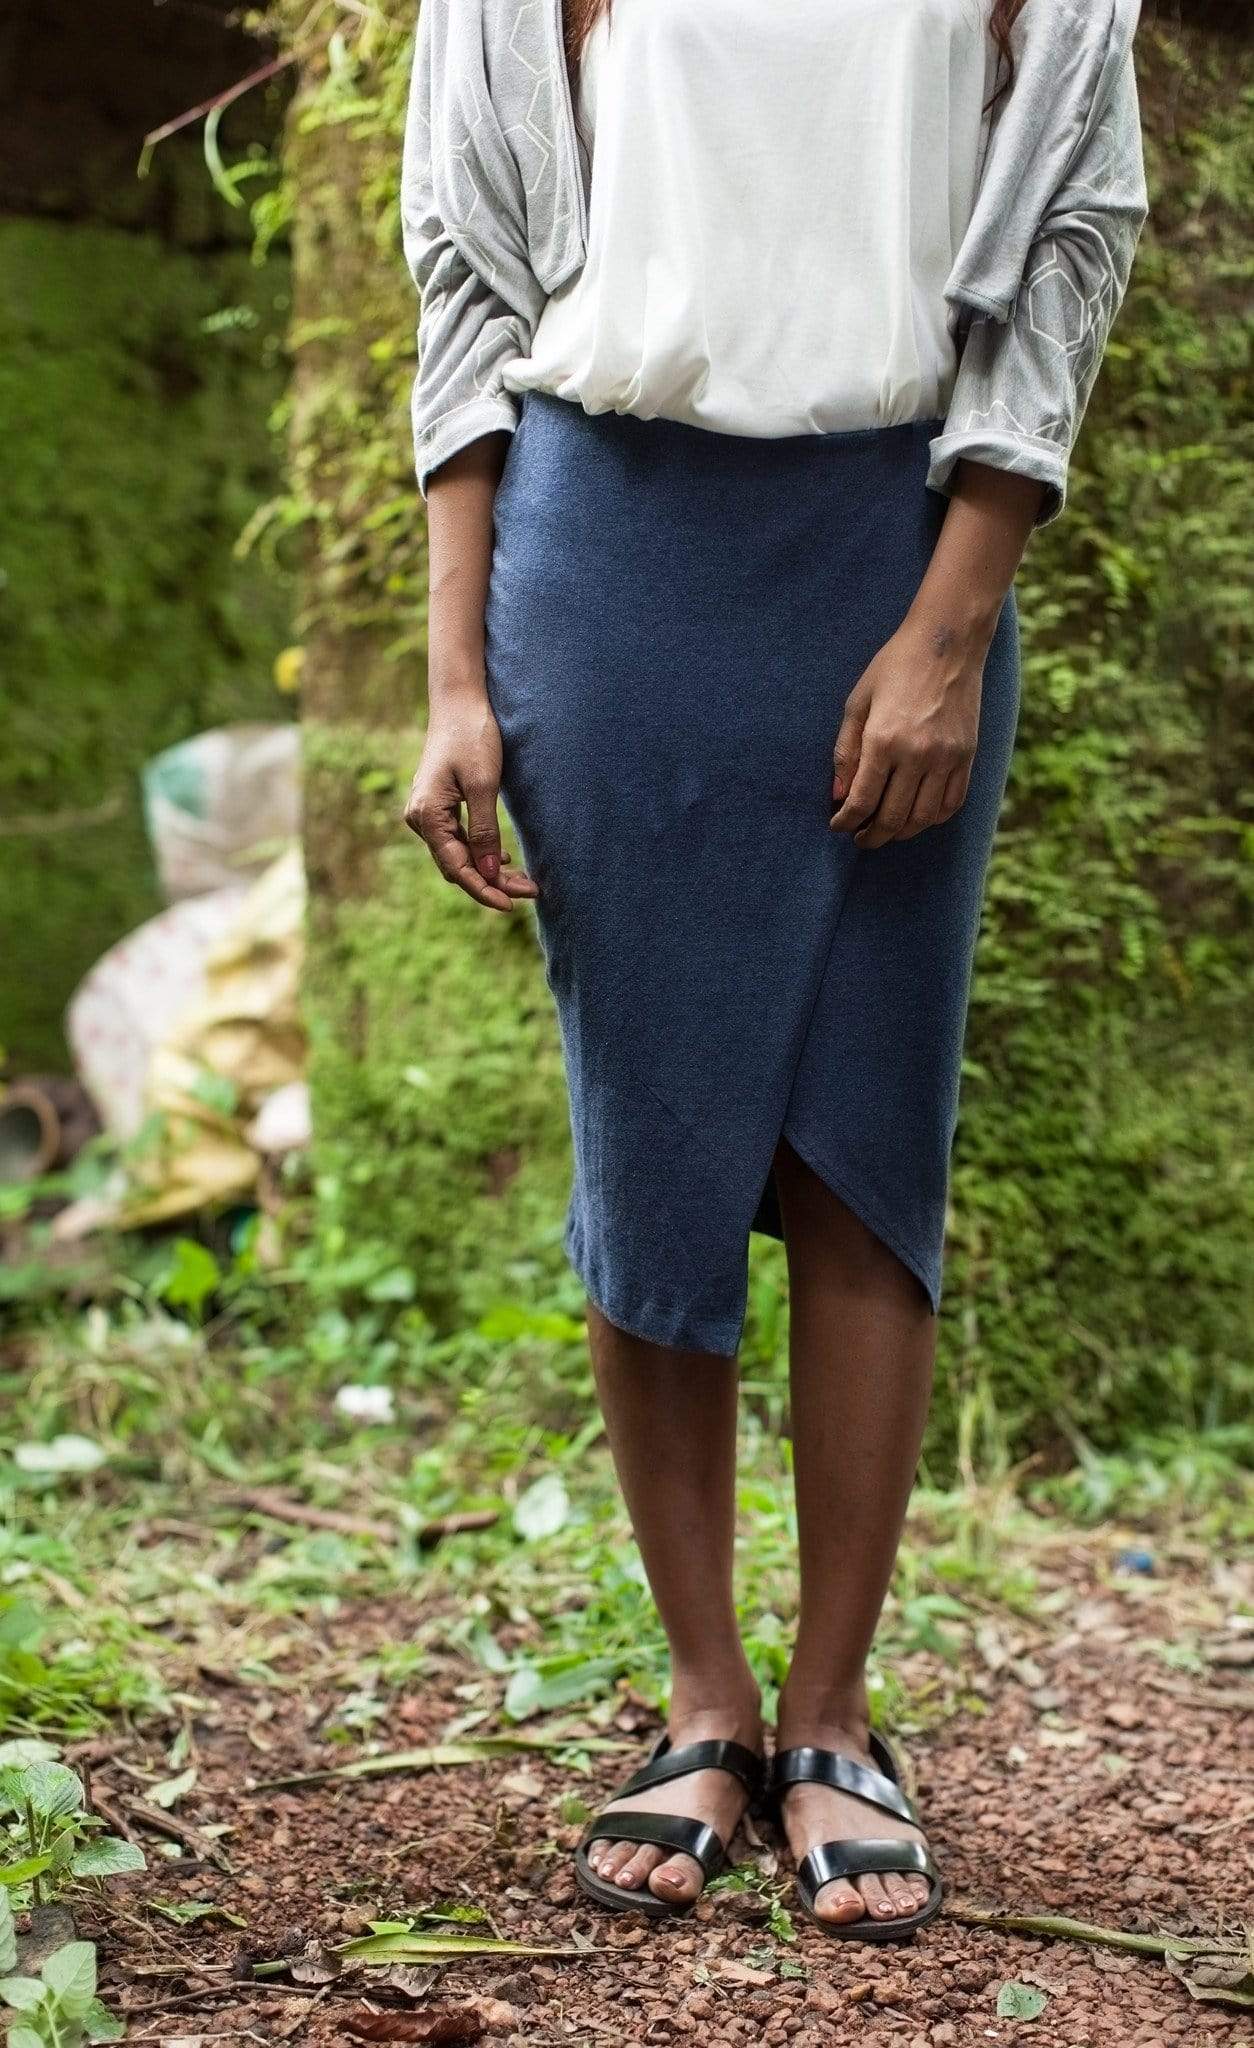 Willow Wrap Skirt-No Nasties - Organic Cotton Clothing